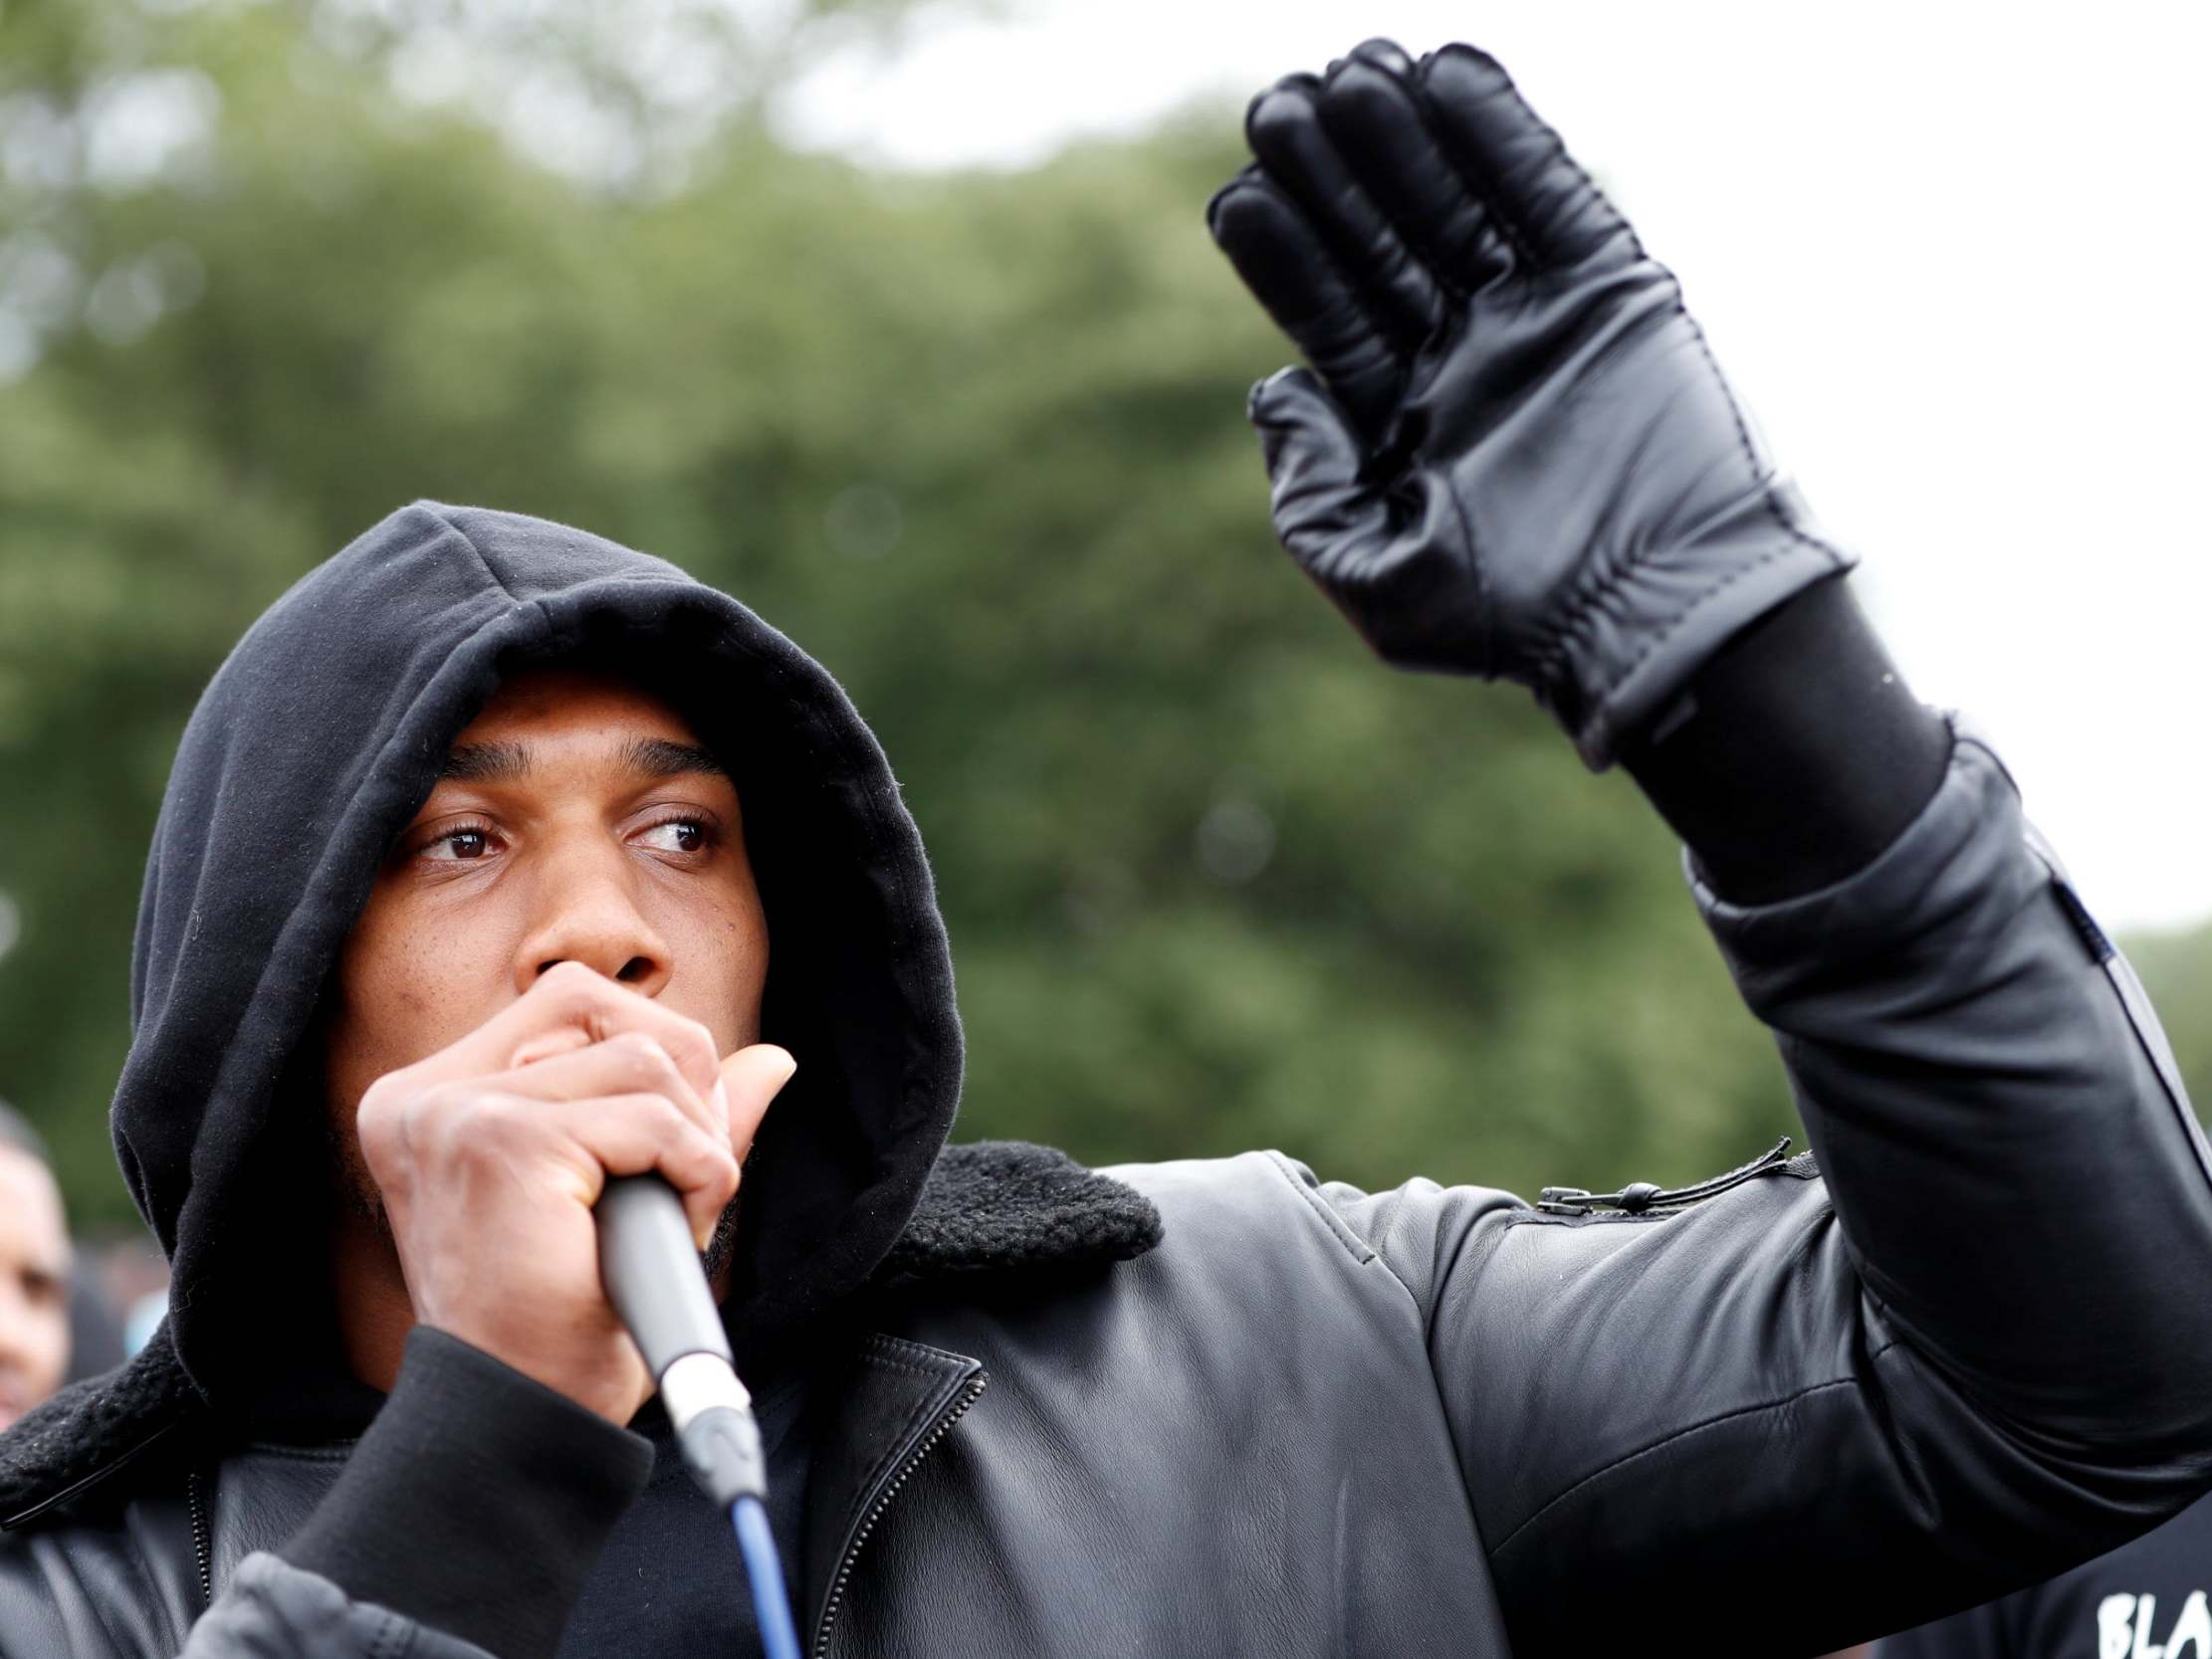 Anthony Joshua spoke at a Black Lives Matter protest in Watford